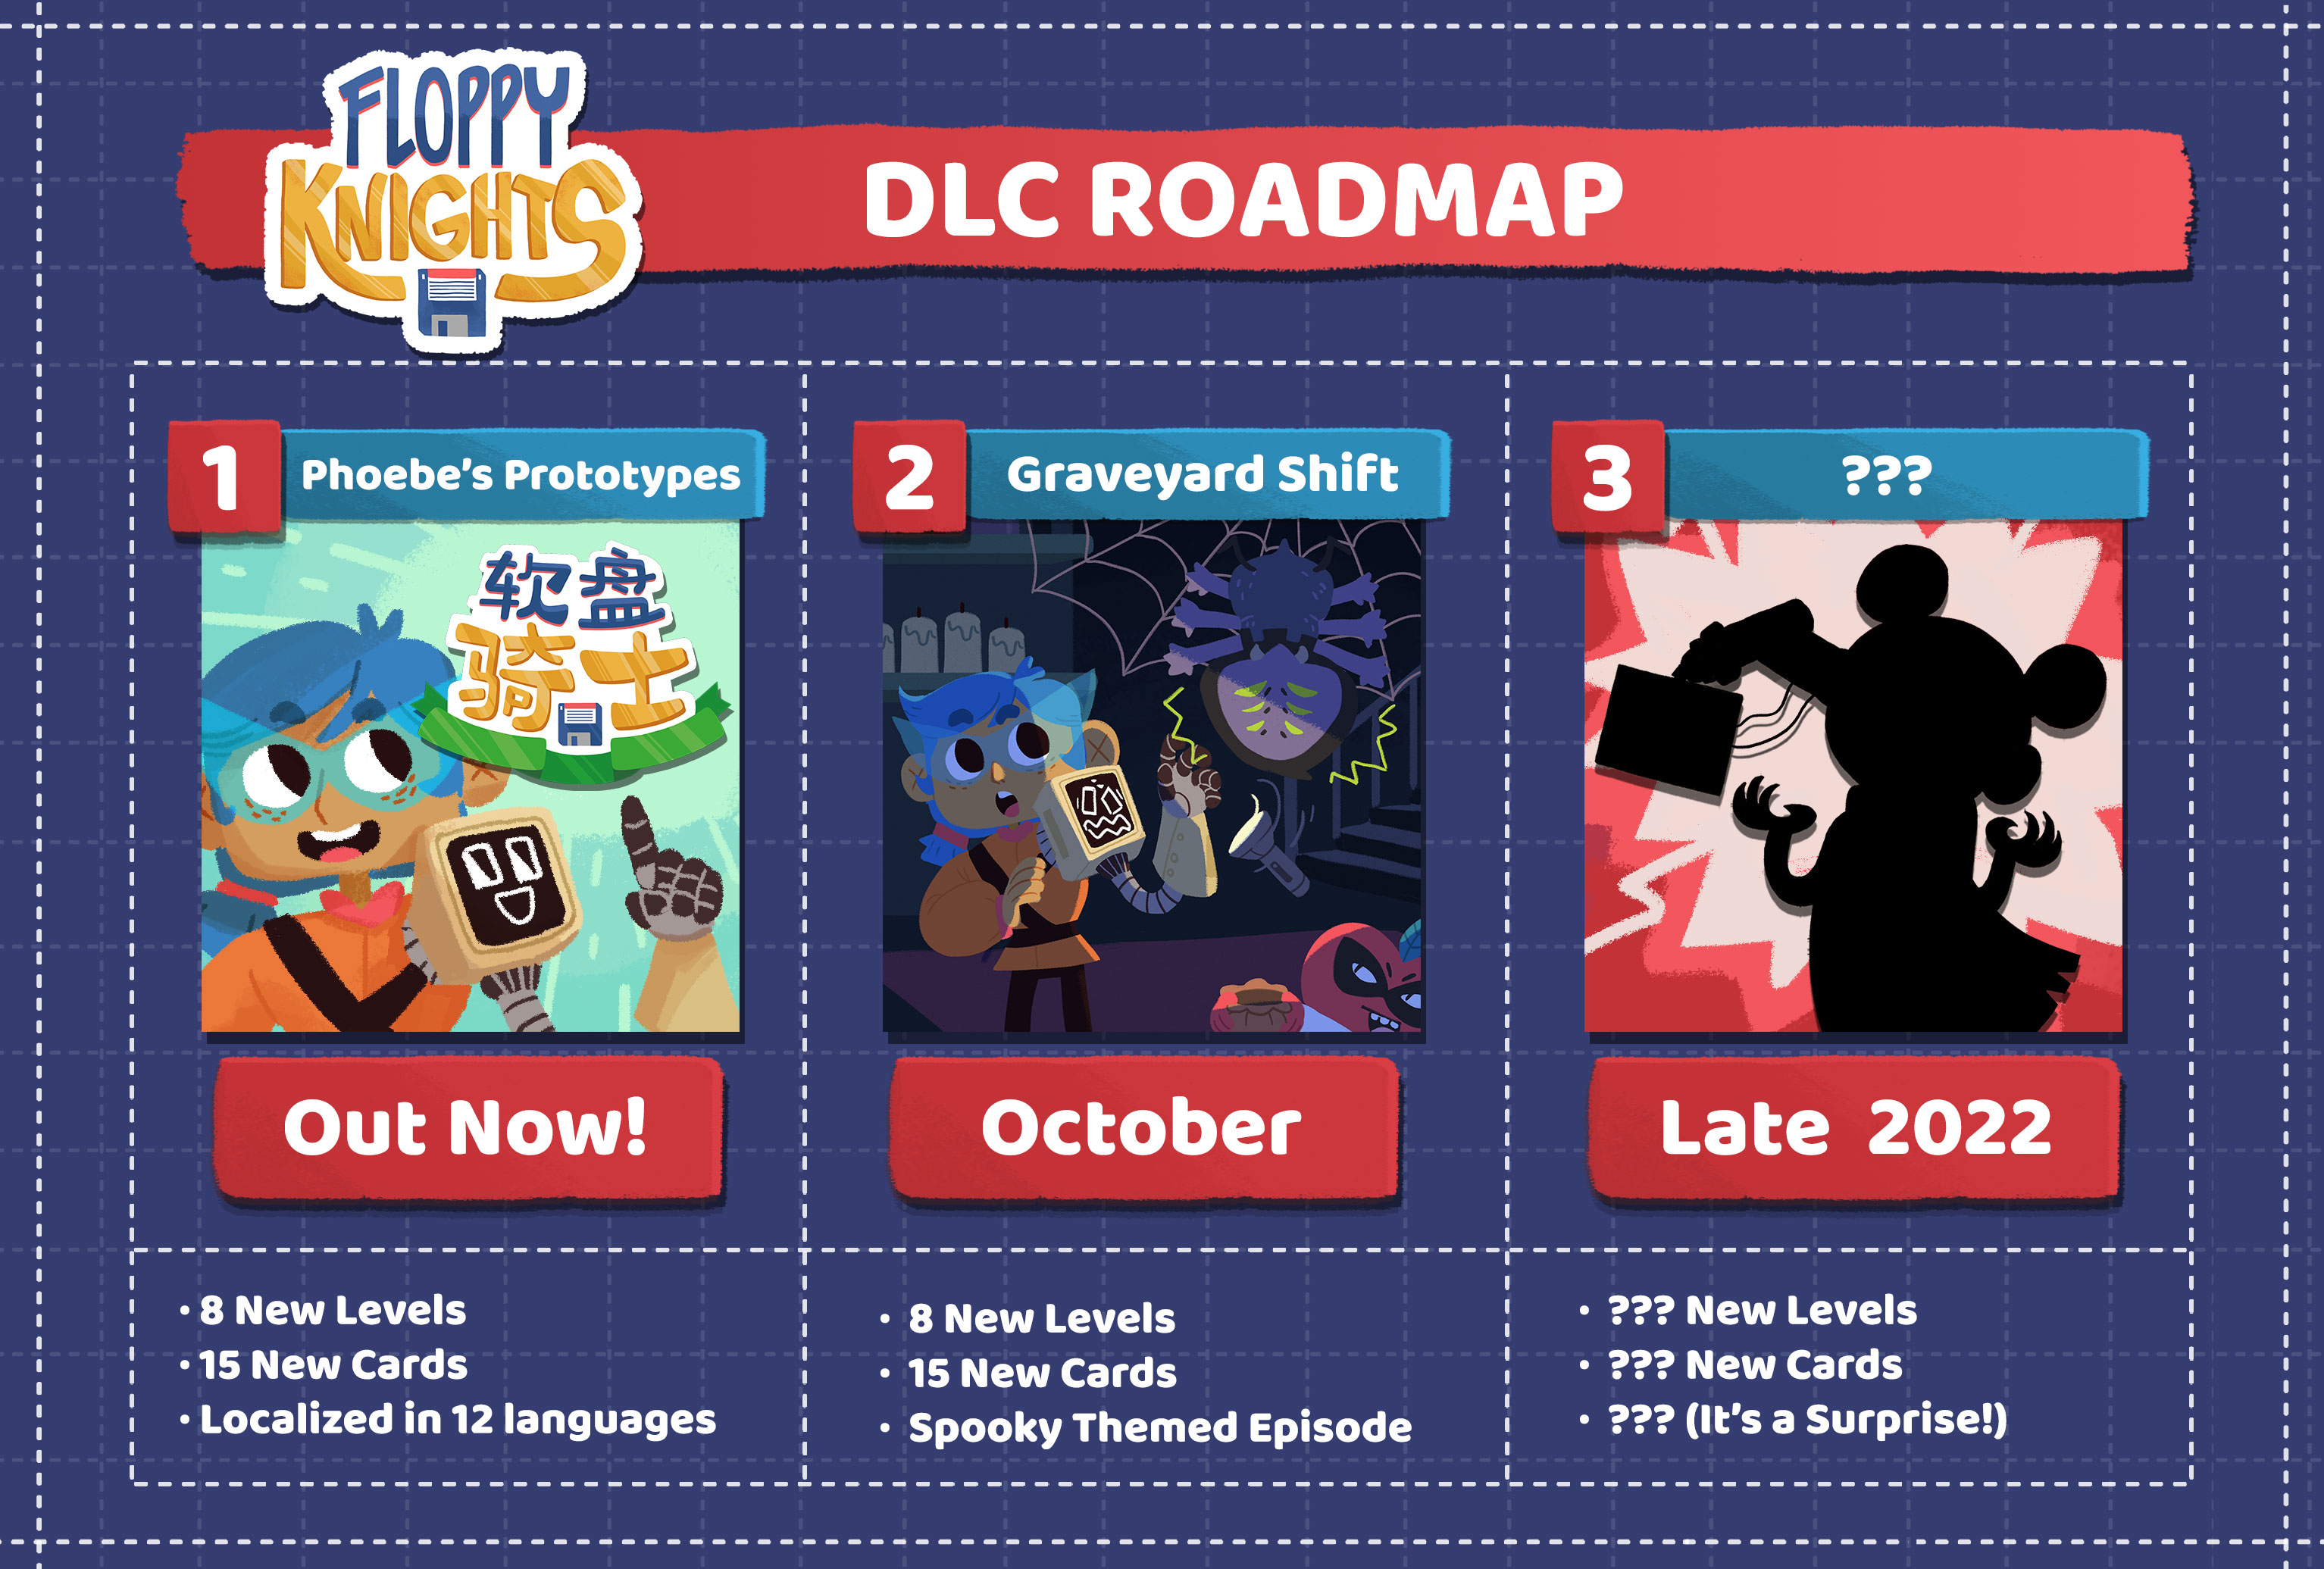 DLC roadmap